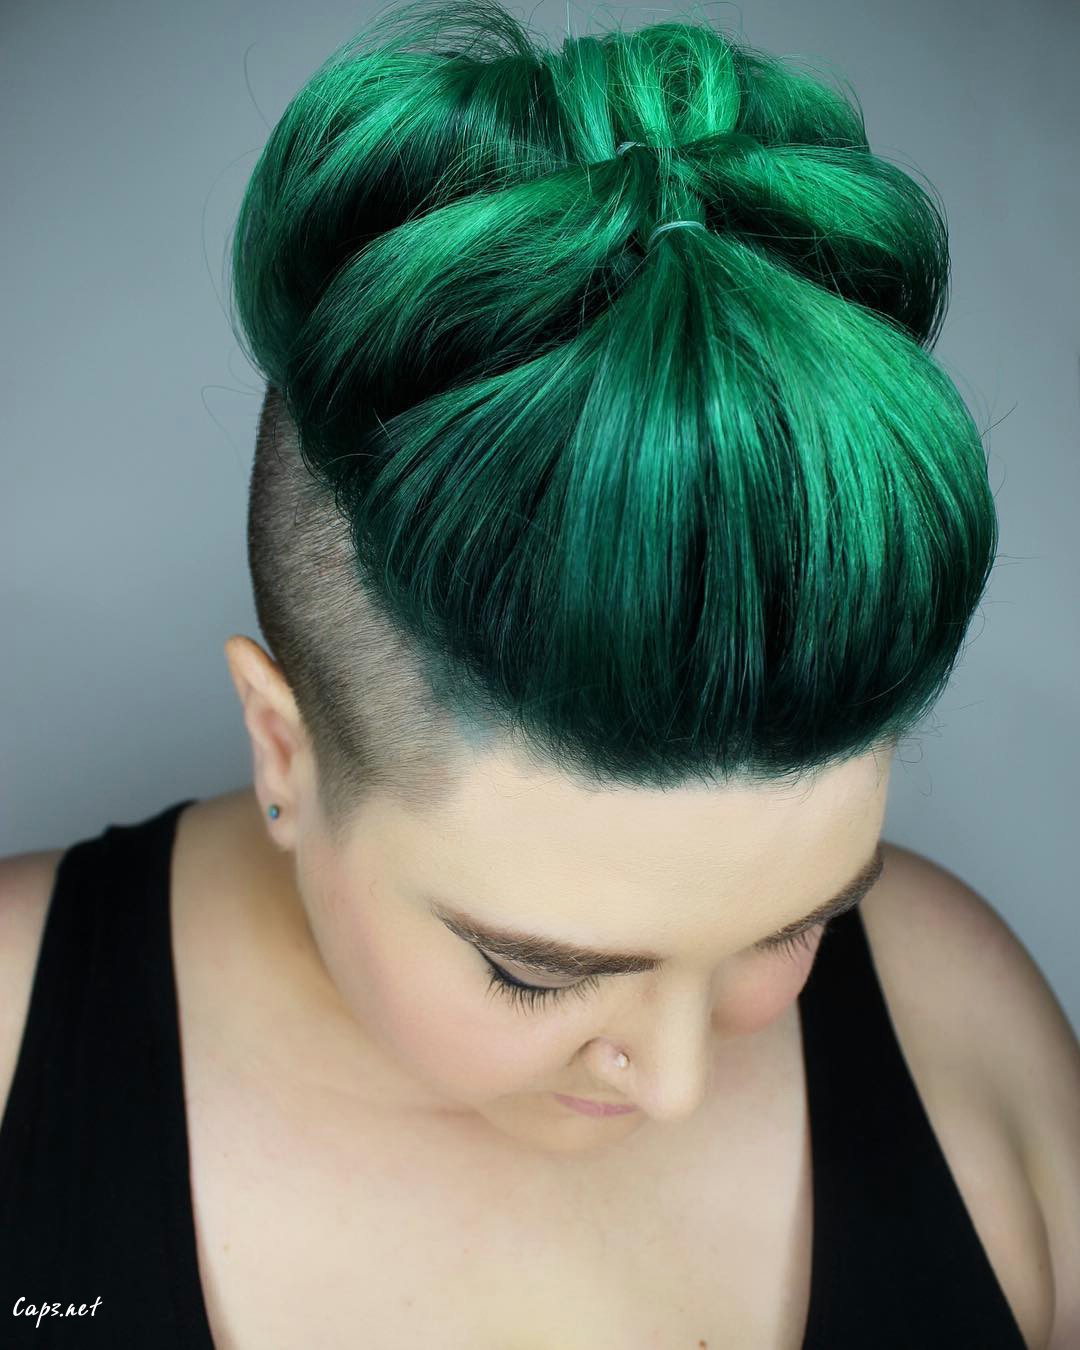 Neon Green Hair With An Undercut